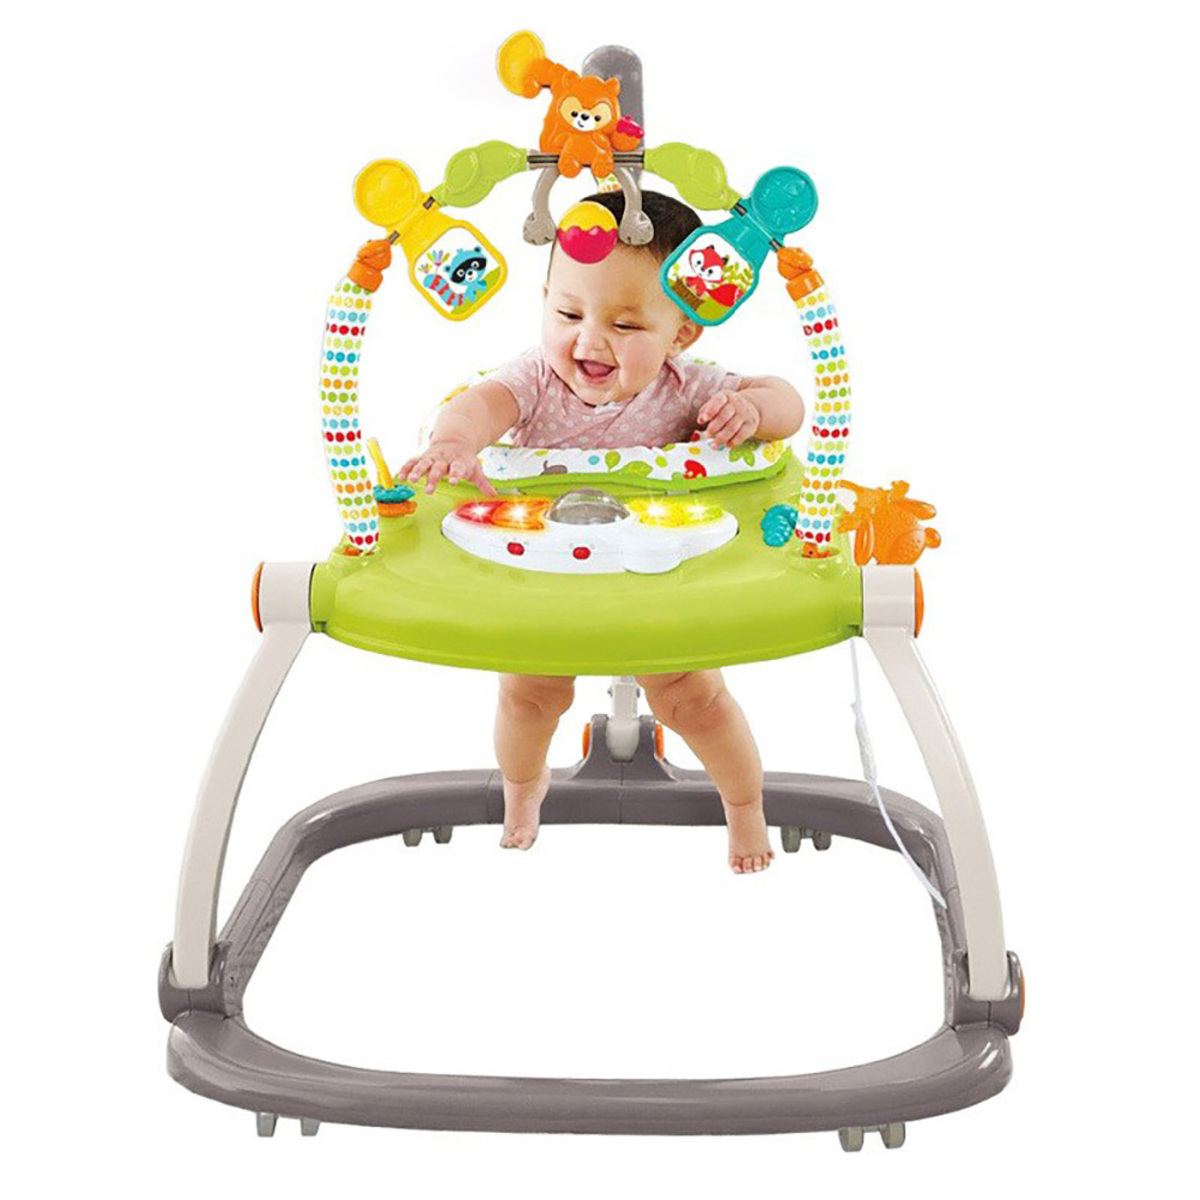 Yaya Duck Babylove Baby Walker Activity Jumping Chair 2-In-1 5912-Green